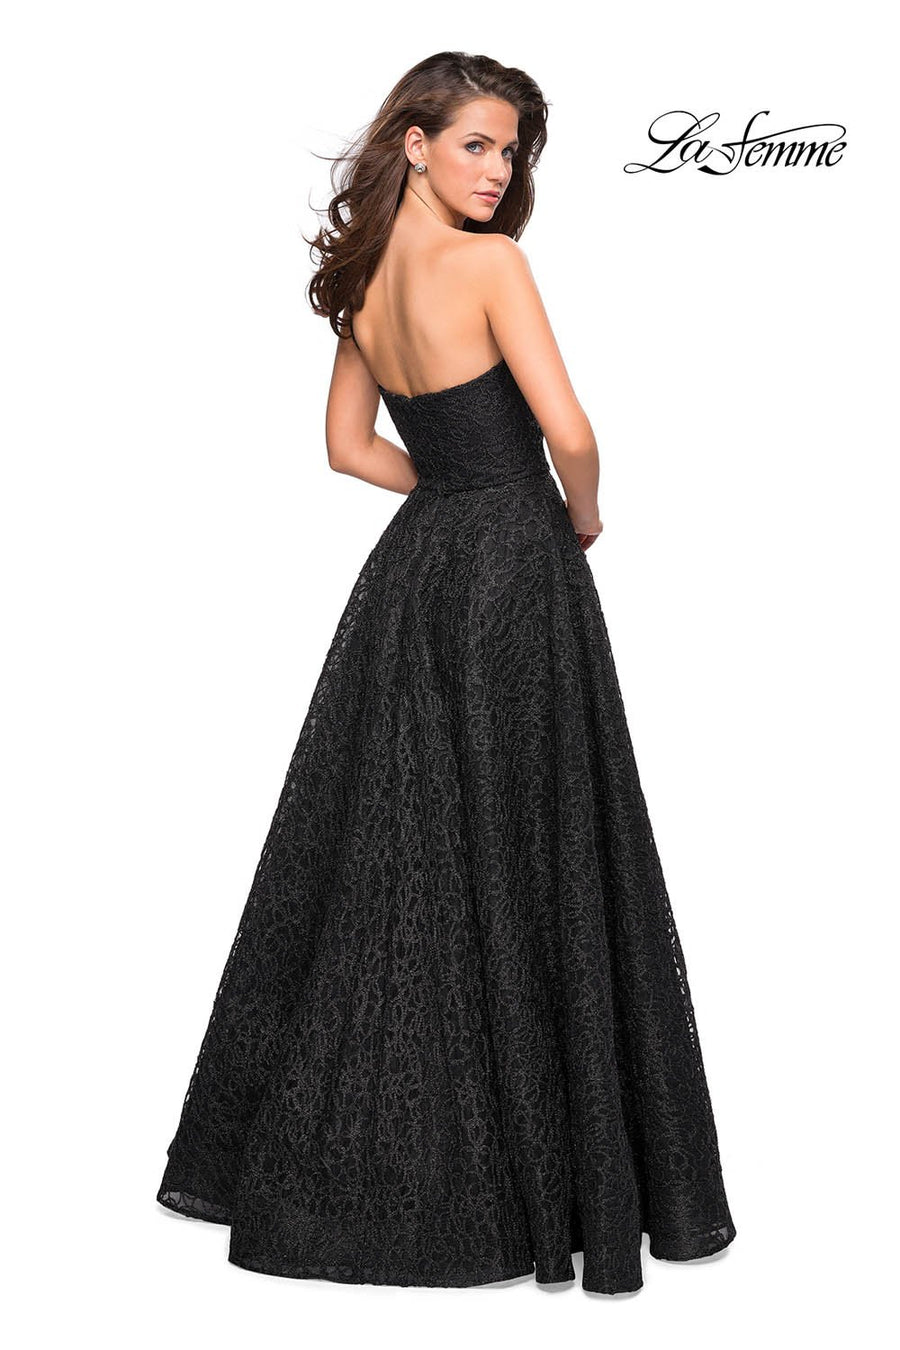 La Femme 27063 prom dress images.  La Femme 27063 is available in these colors: Black, Burgundy, Light Gold, Light Pink.